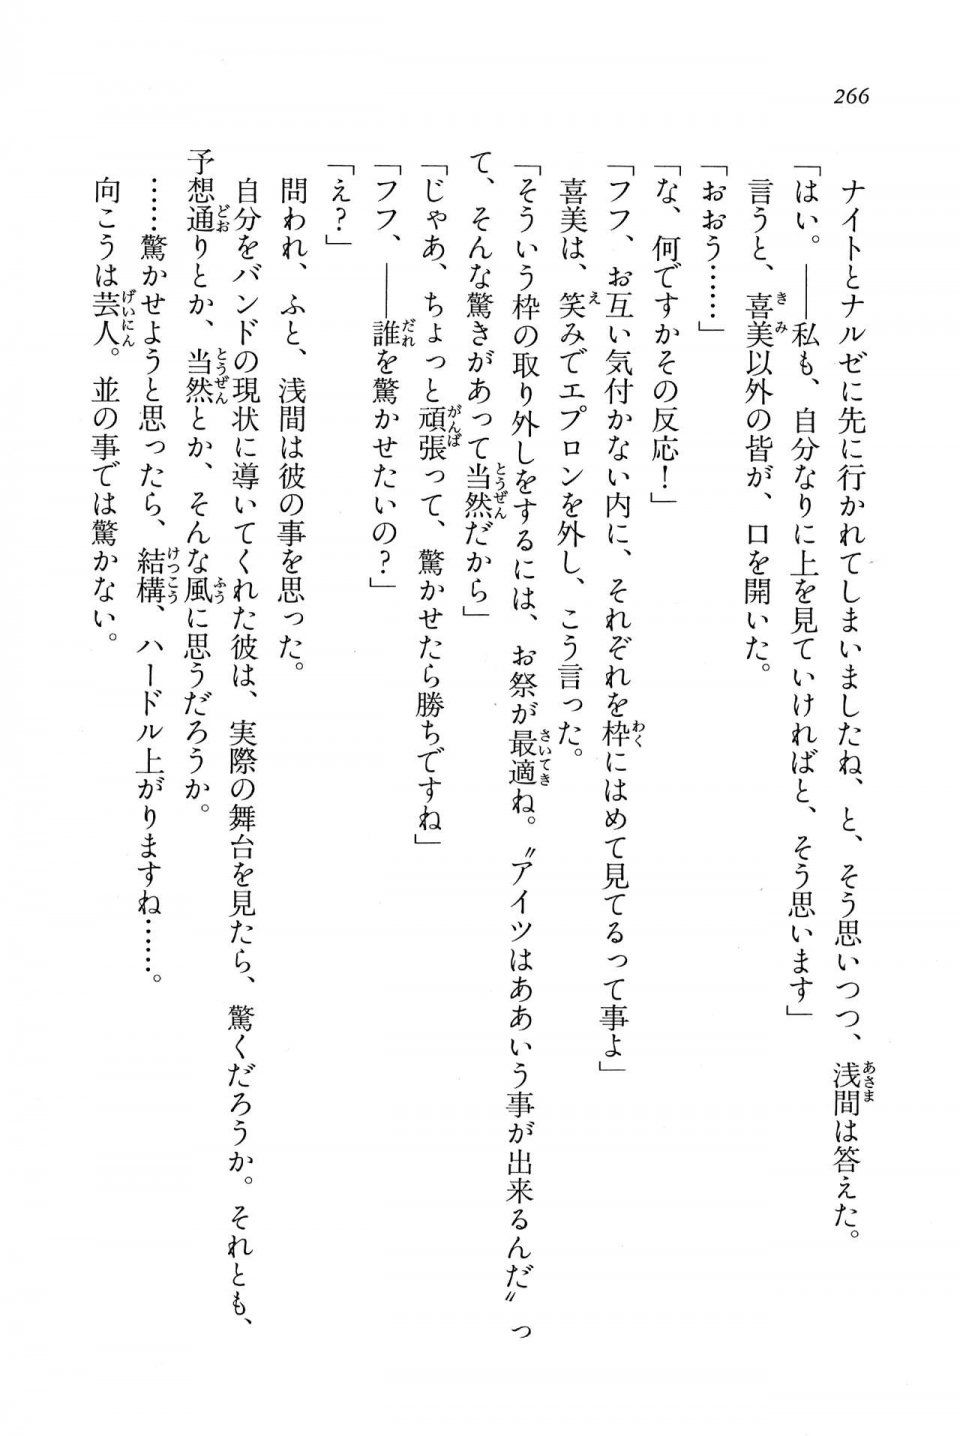 Kyoukai Senjou no Horizon BD Special Mininovel Vol 6(3B) - Photo #270